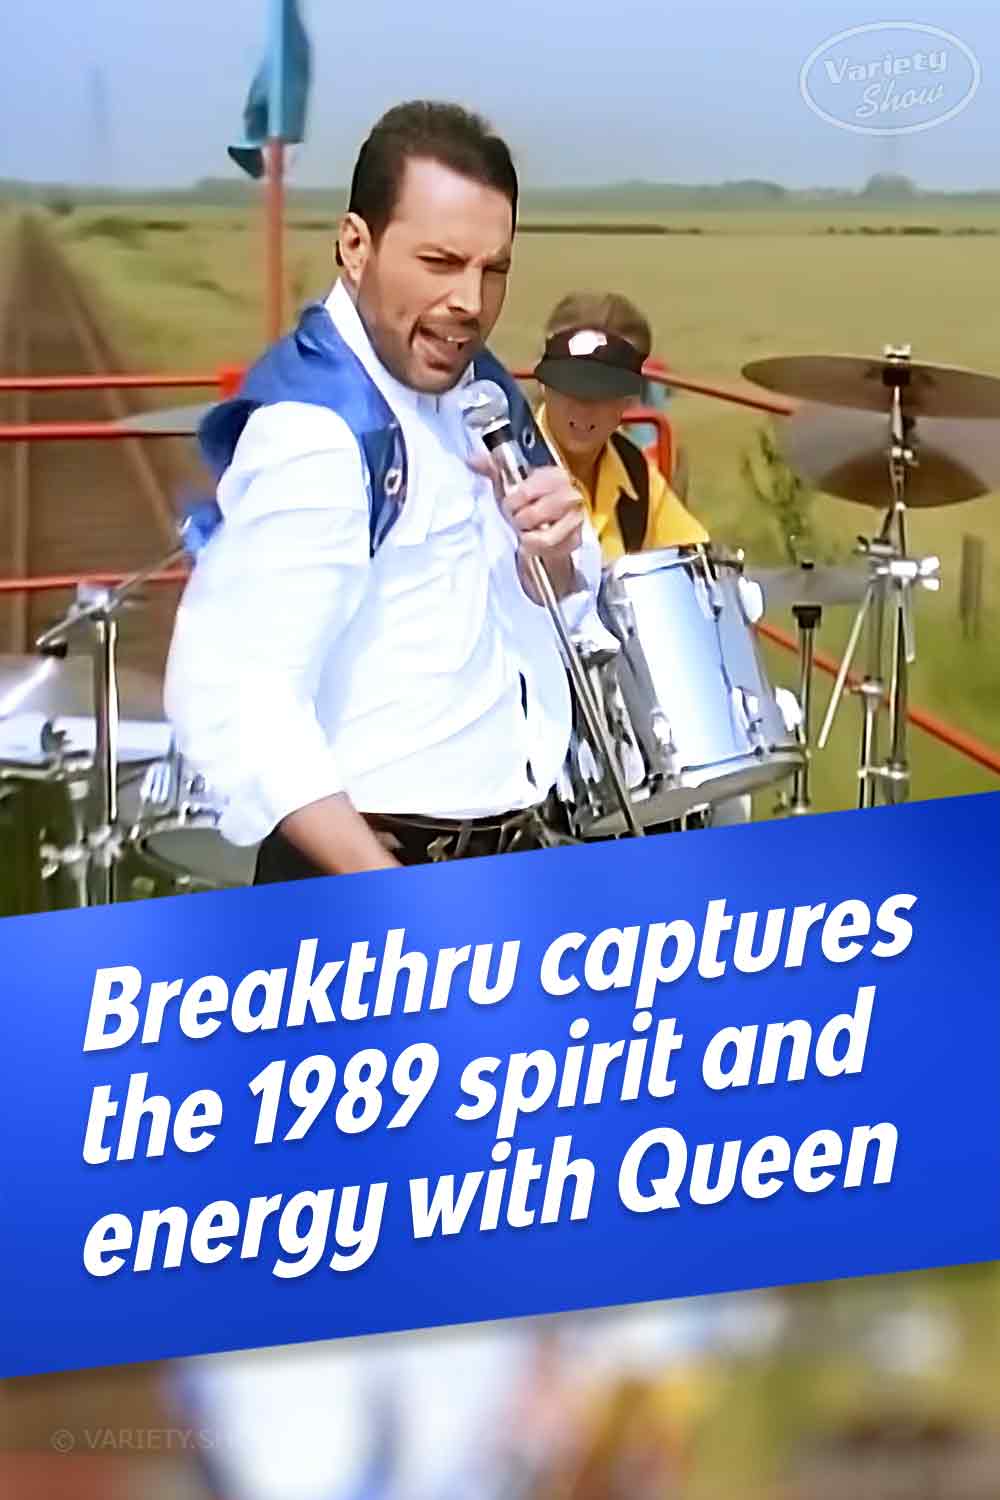 Breakthru captures the 1989 spirit and energy with Queen